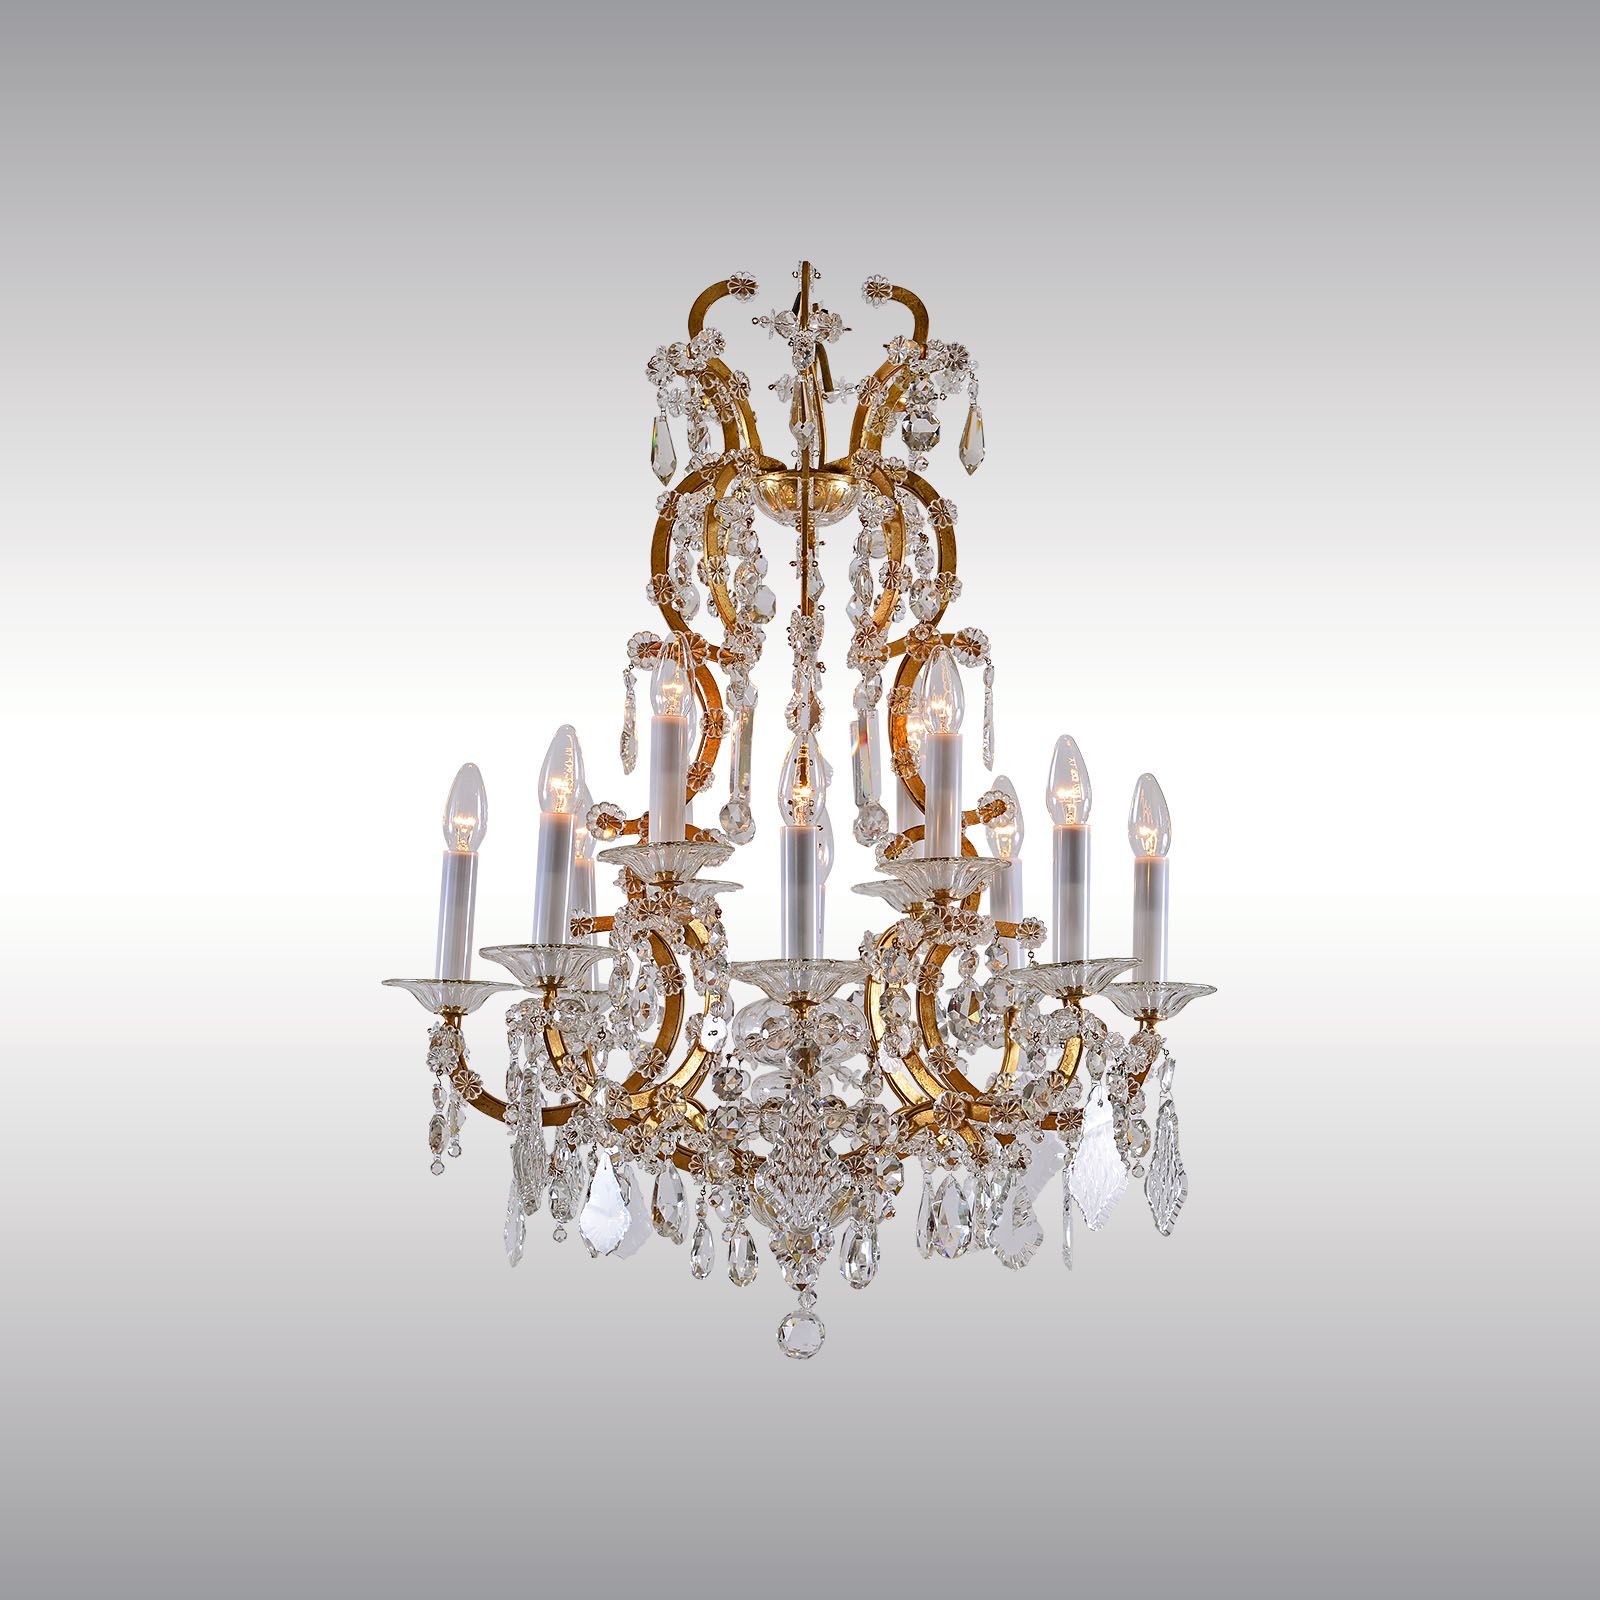 WOKA LAMPS VIENNA - OrderNr.: 80022|Glasluster - Design: Maria Theresien Stil